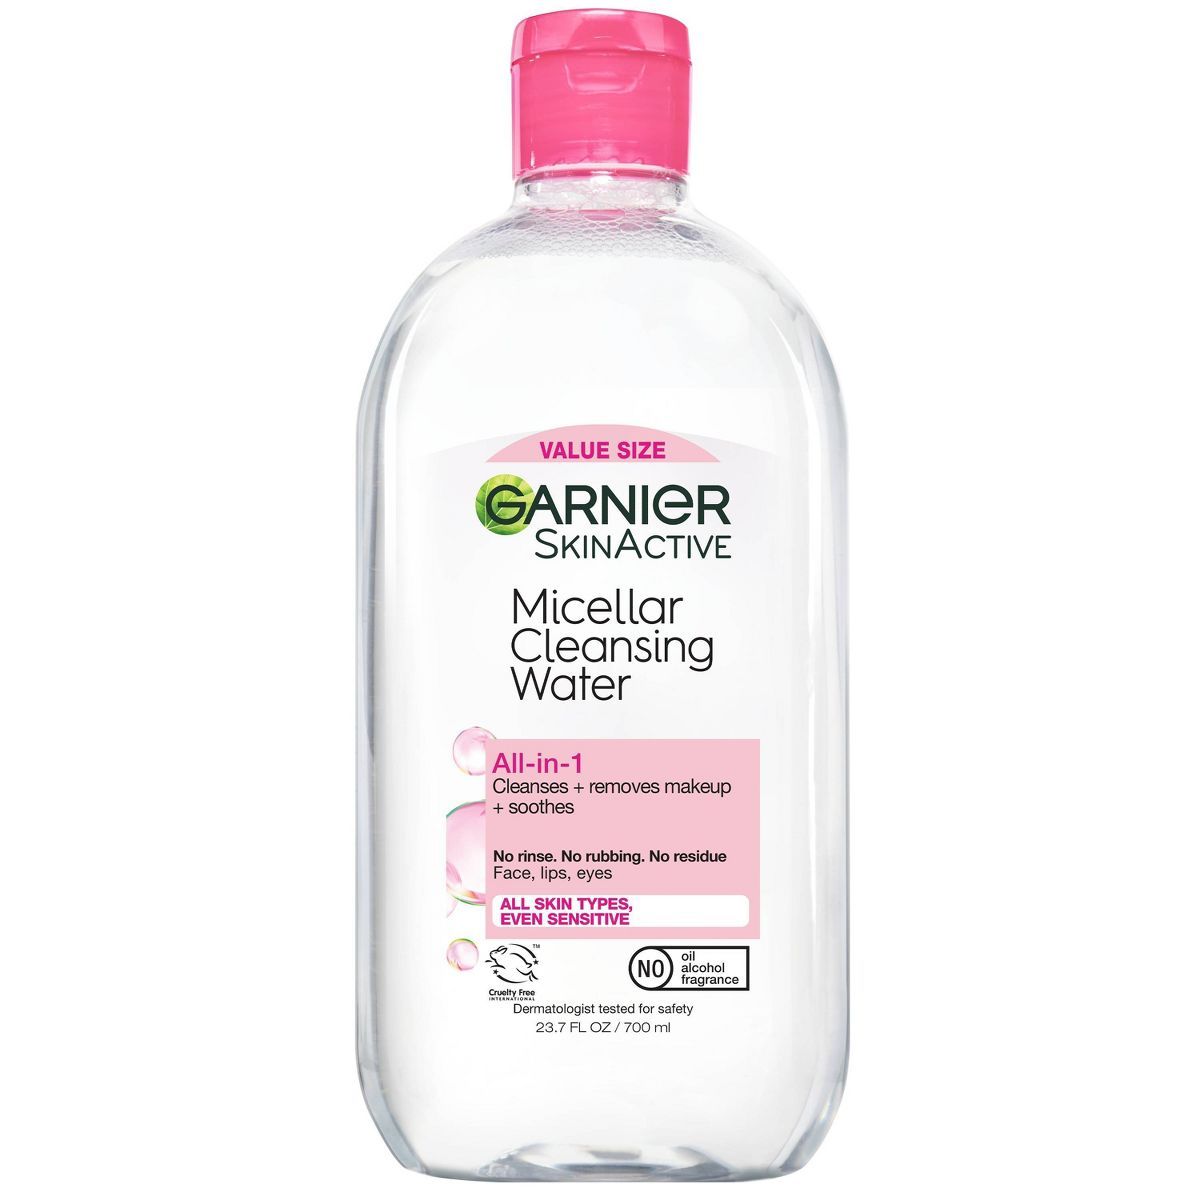 Garnier SKINACTIVE Micellar Cleansing Water All-in-1 Makeup Remover & Cleanser | Target